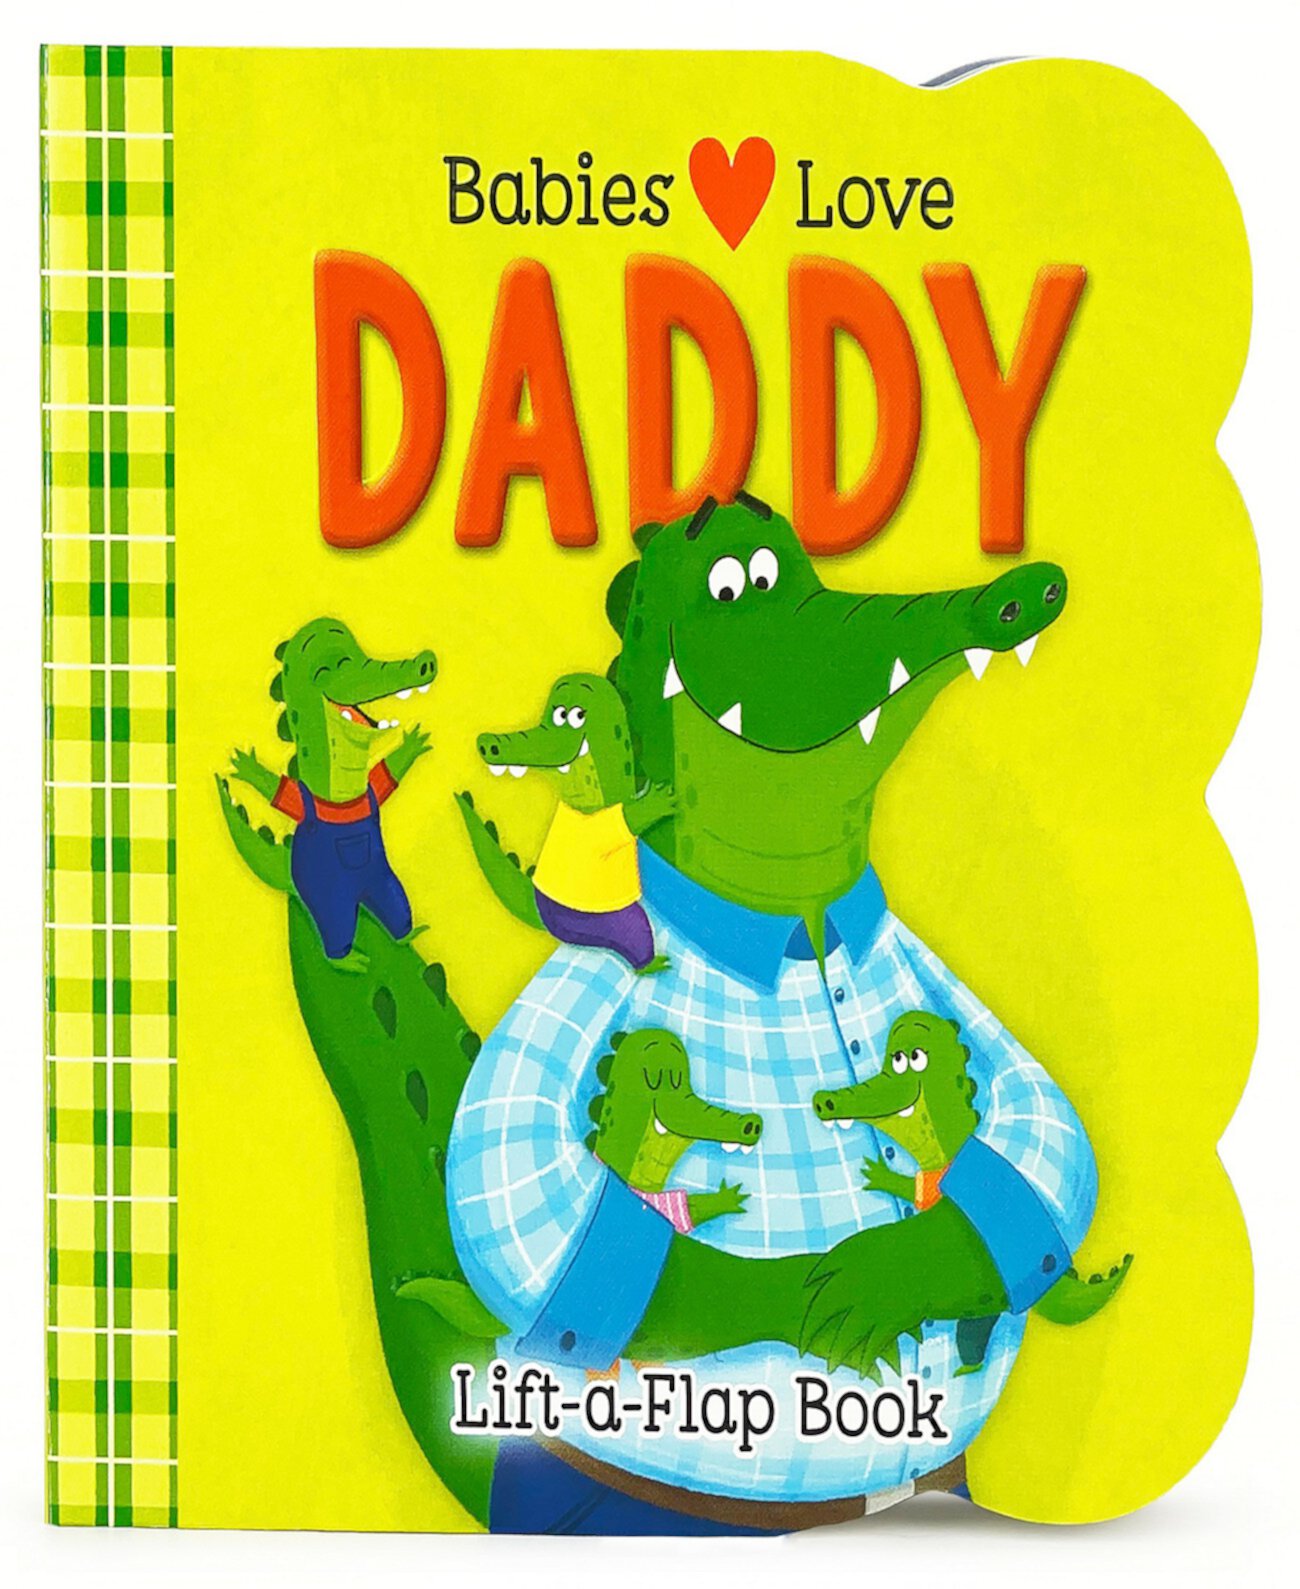 Cottage Door Press-Babies Love Daddy-A Lift-a-Flap Board Book Readerlink